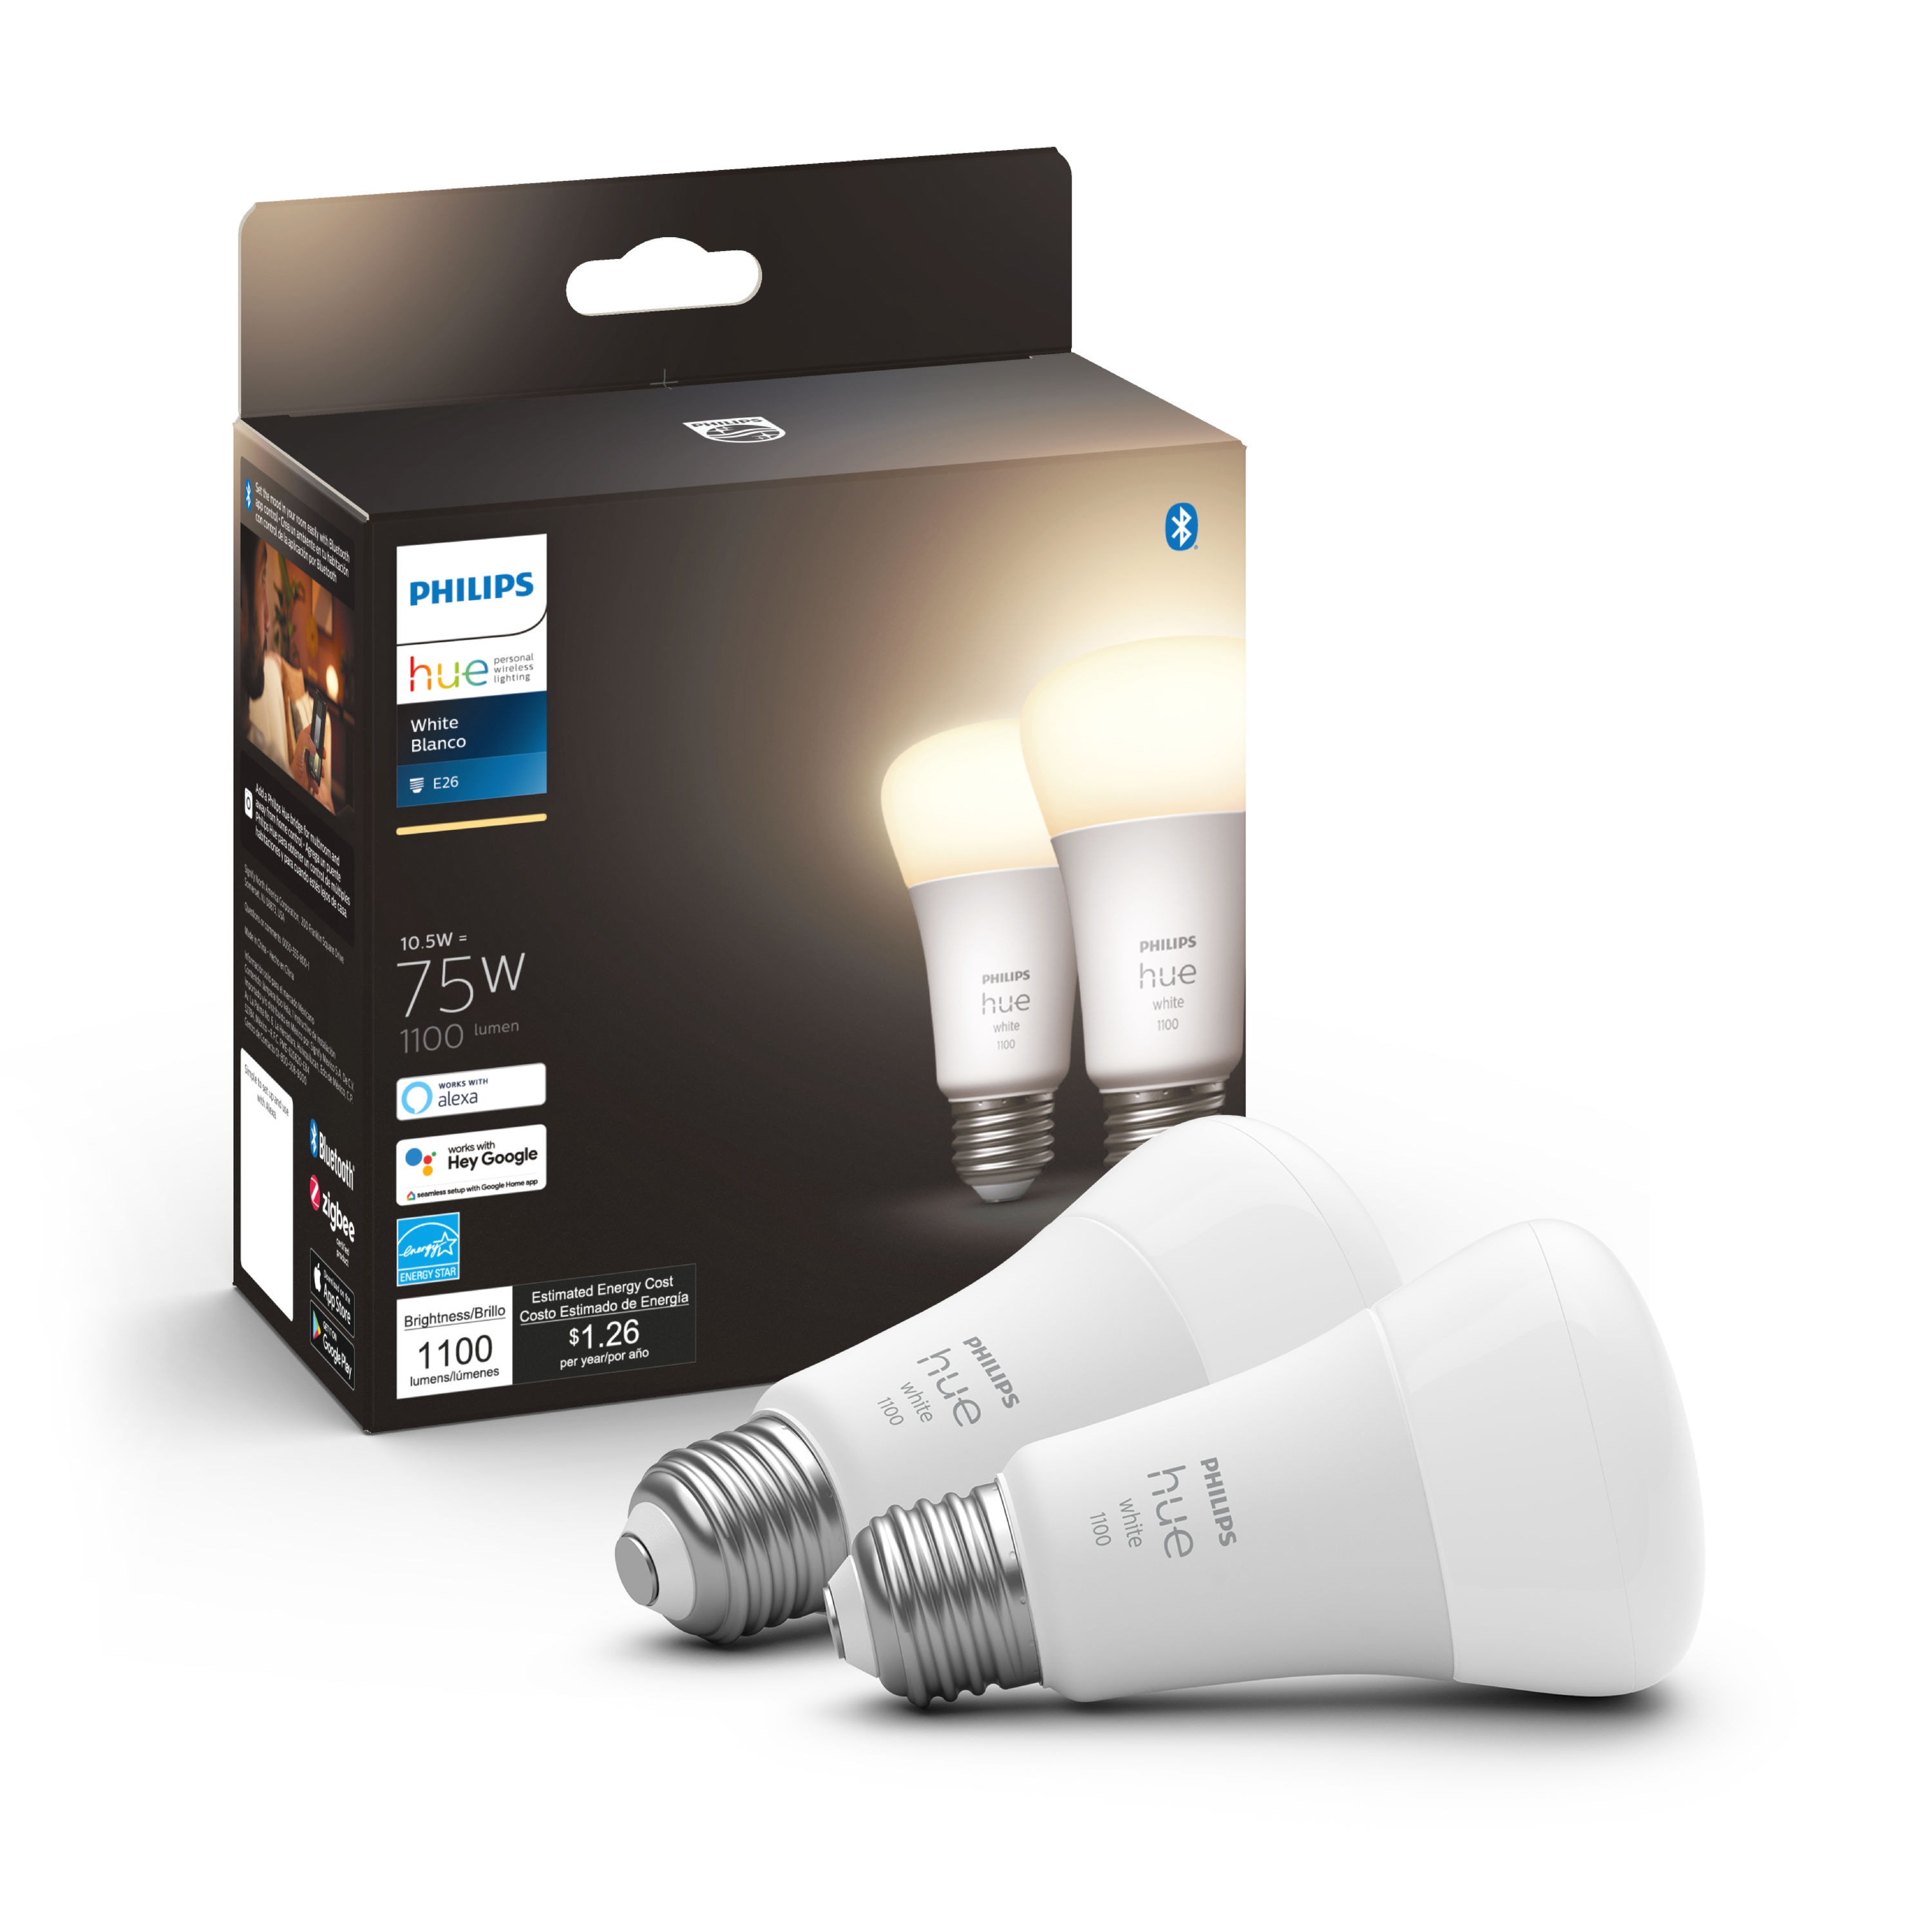 Philips General Purpose Light Bulbs at